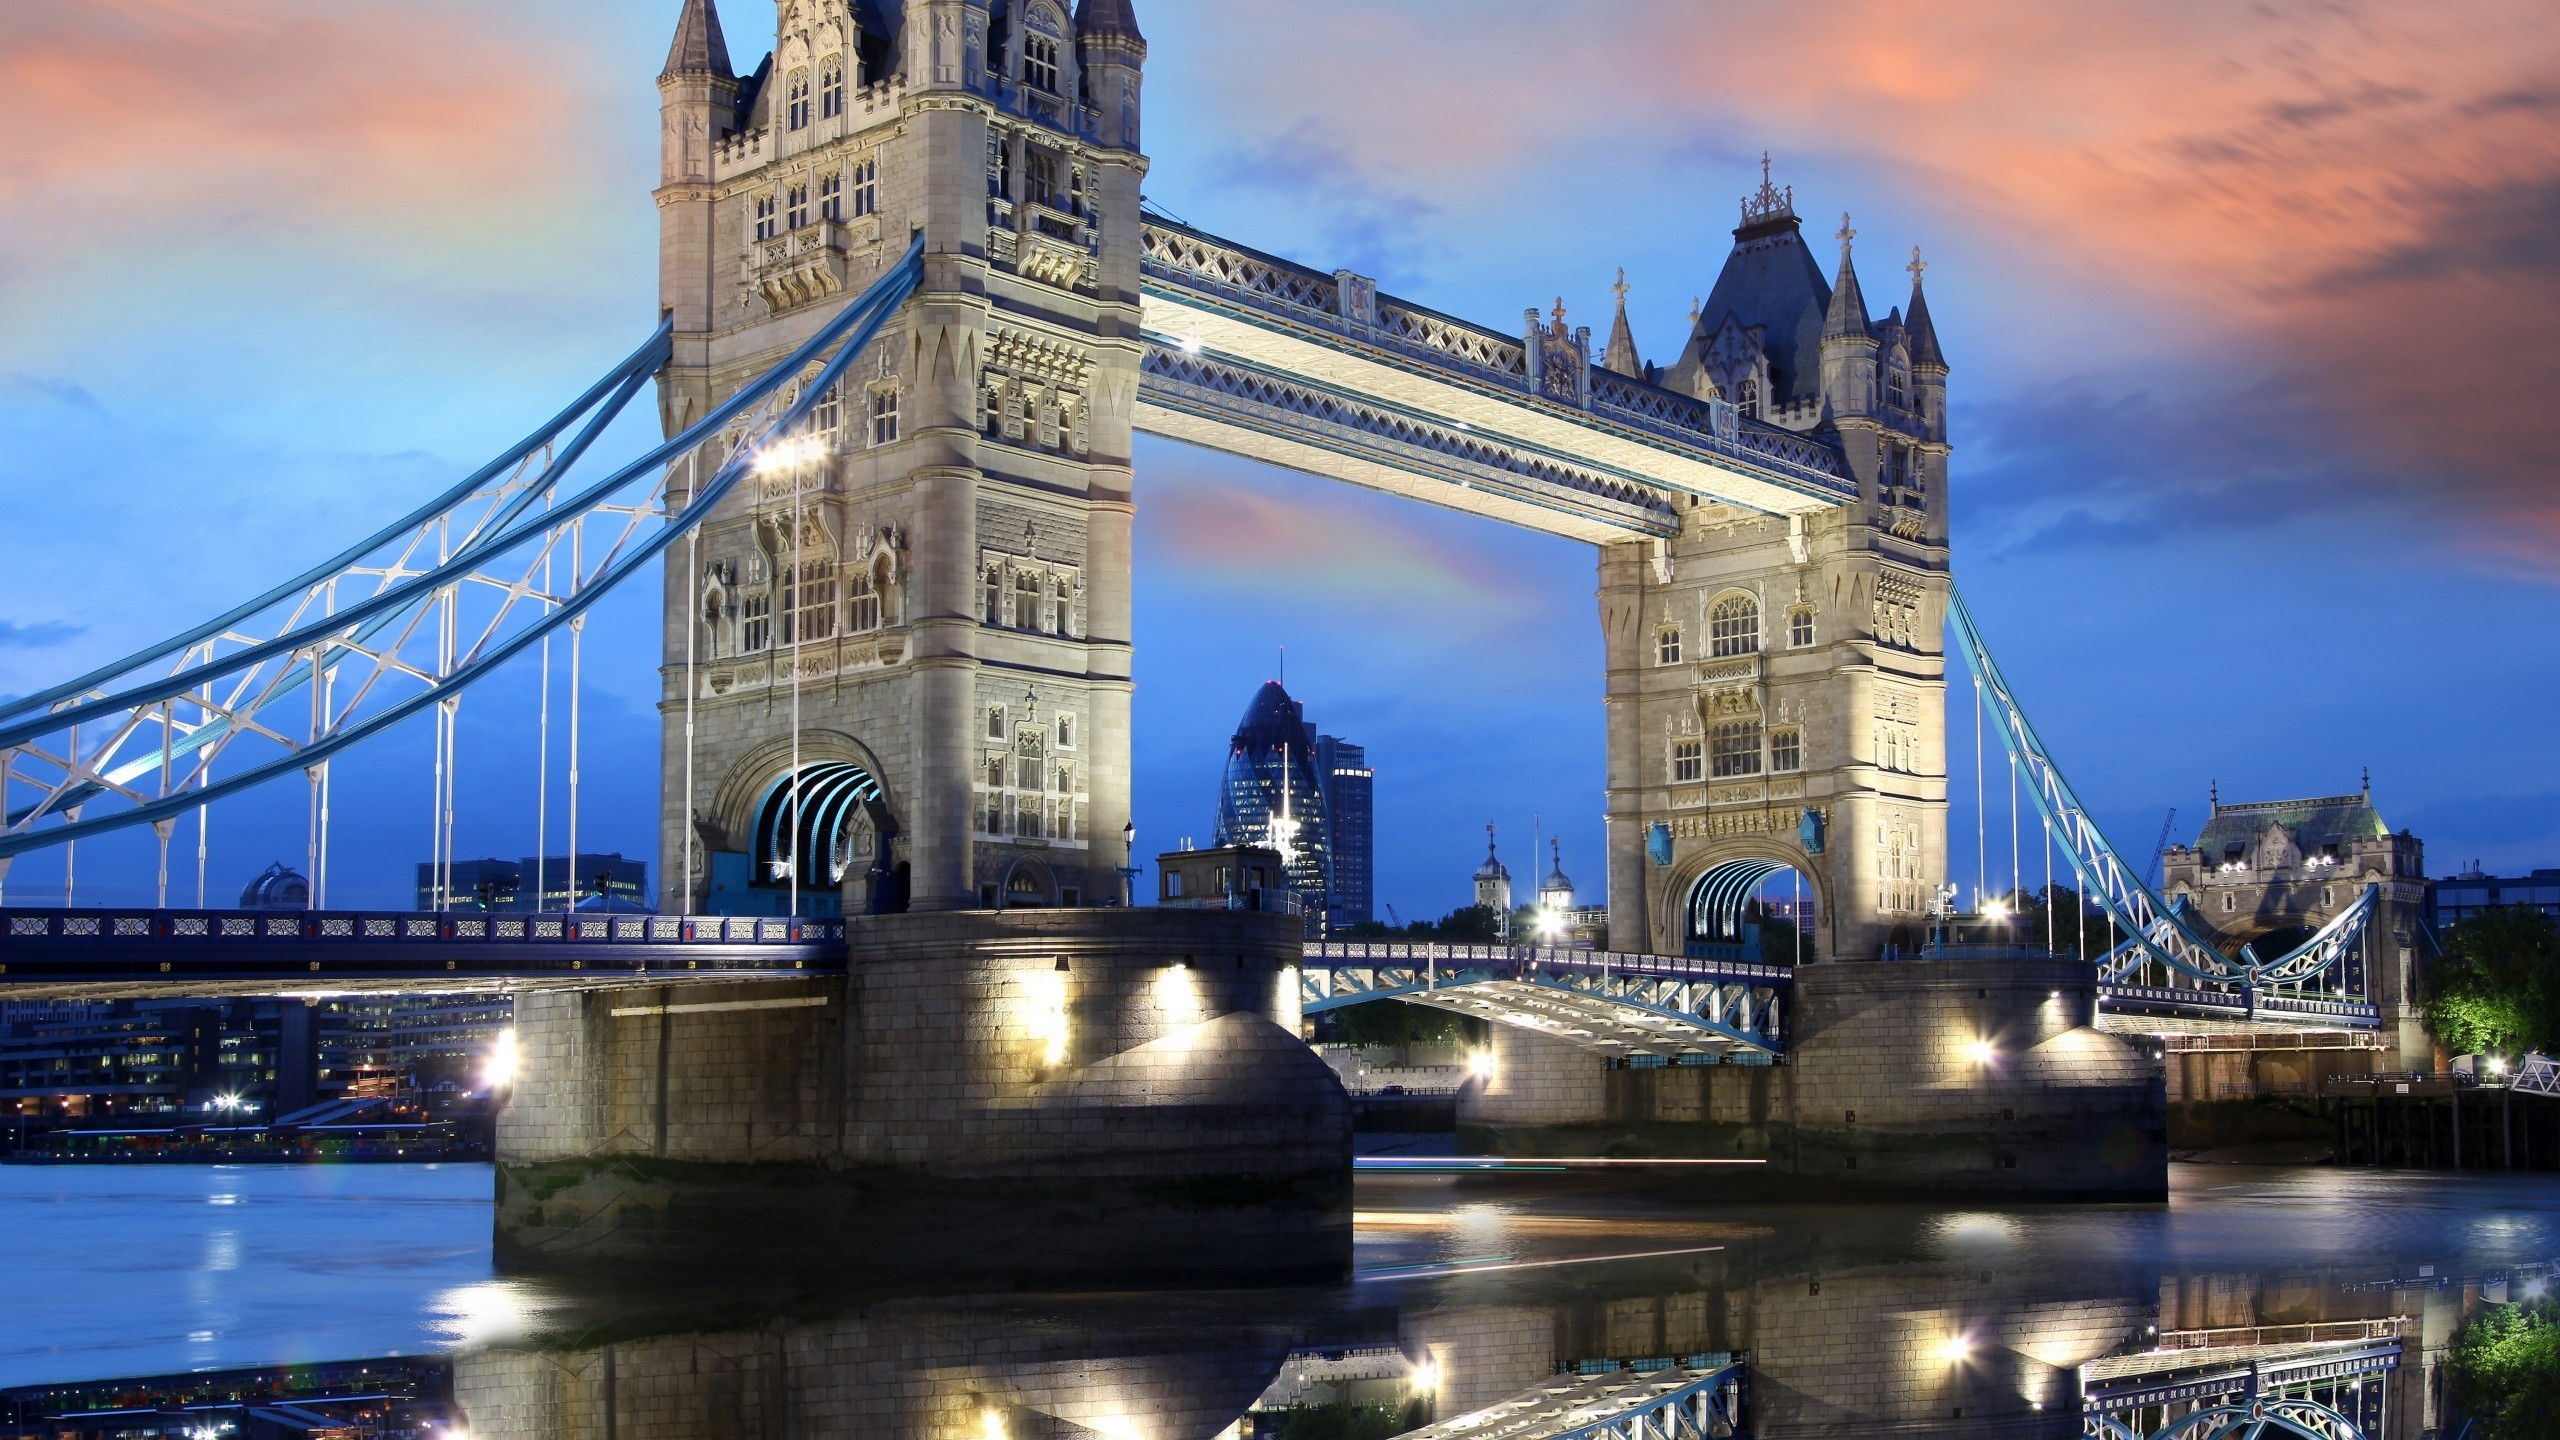 Night Over Tower Bridge for 2560x1440 HDTV resolution